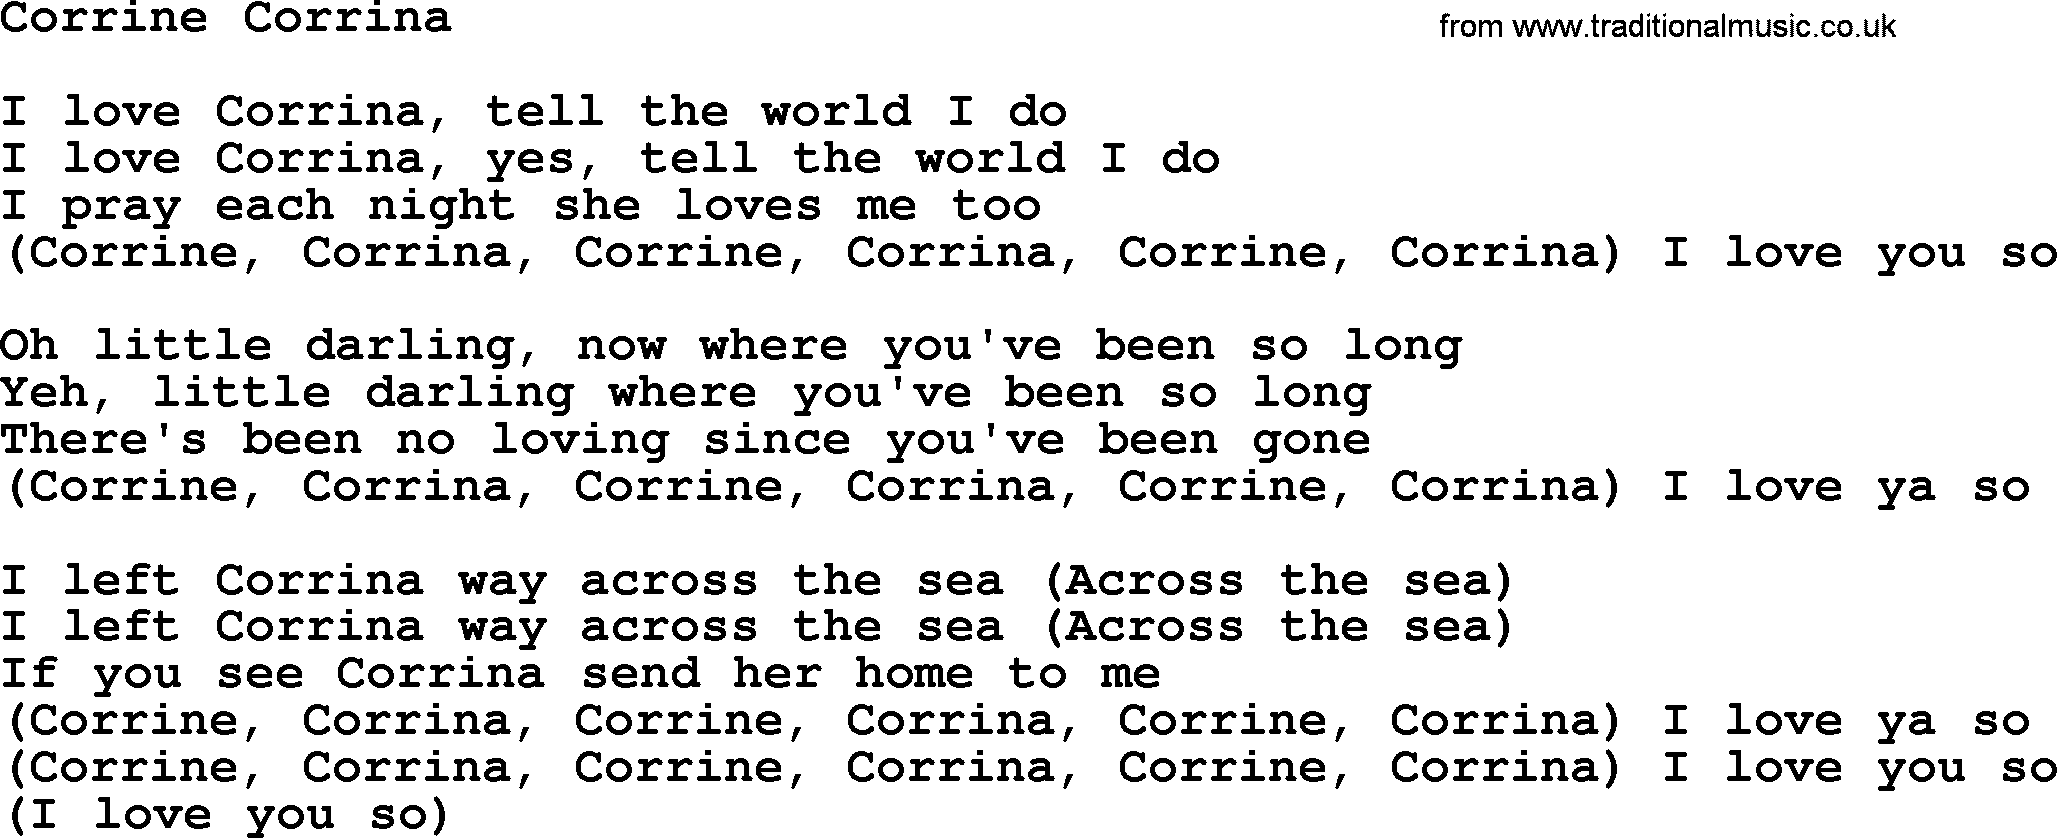 Willie Nelson song: Corrine Corrina lyrics